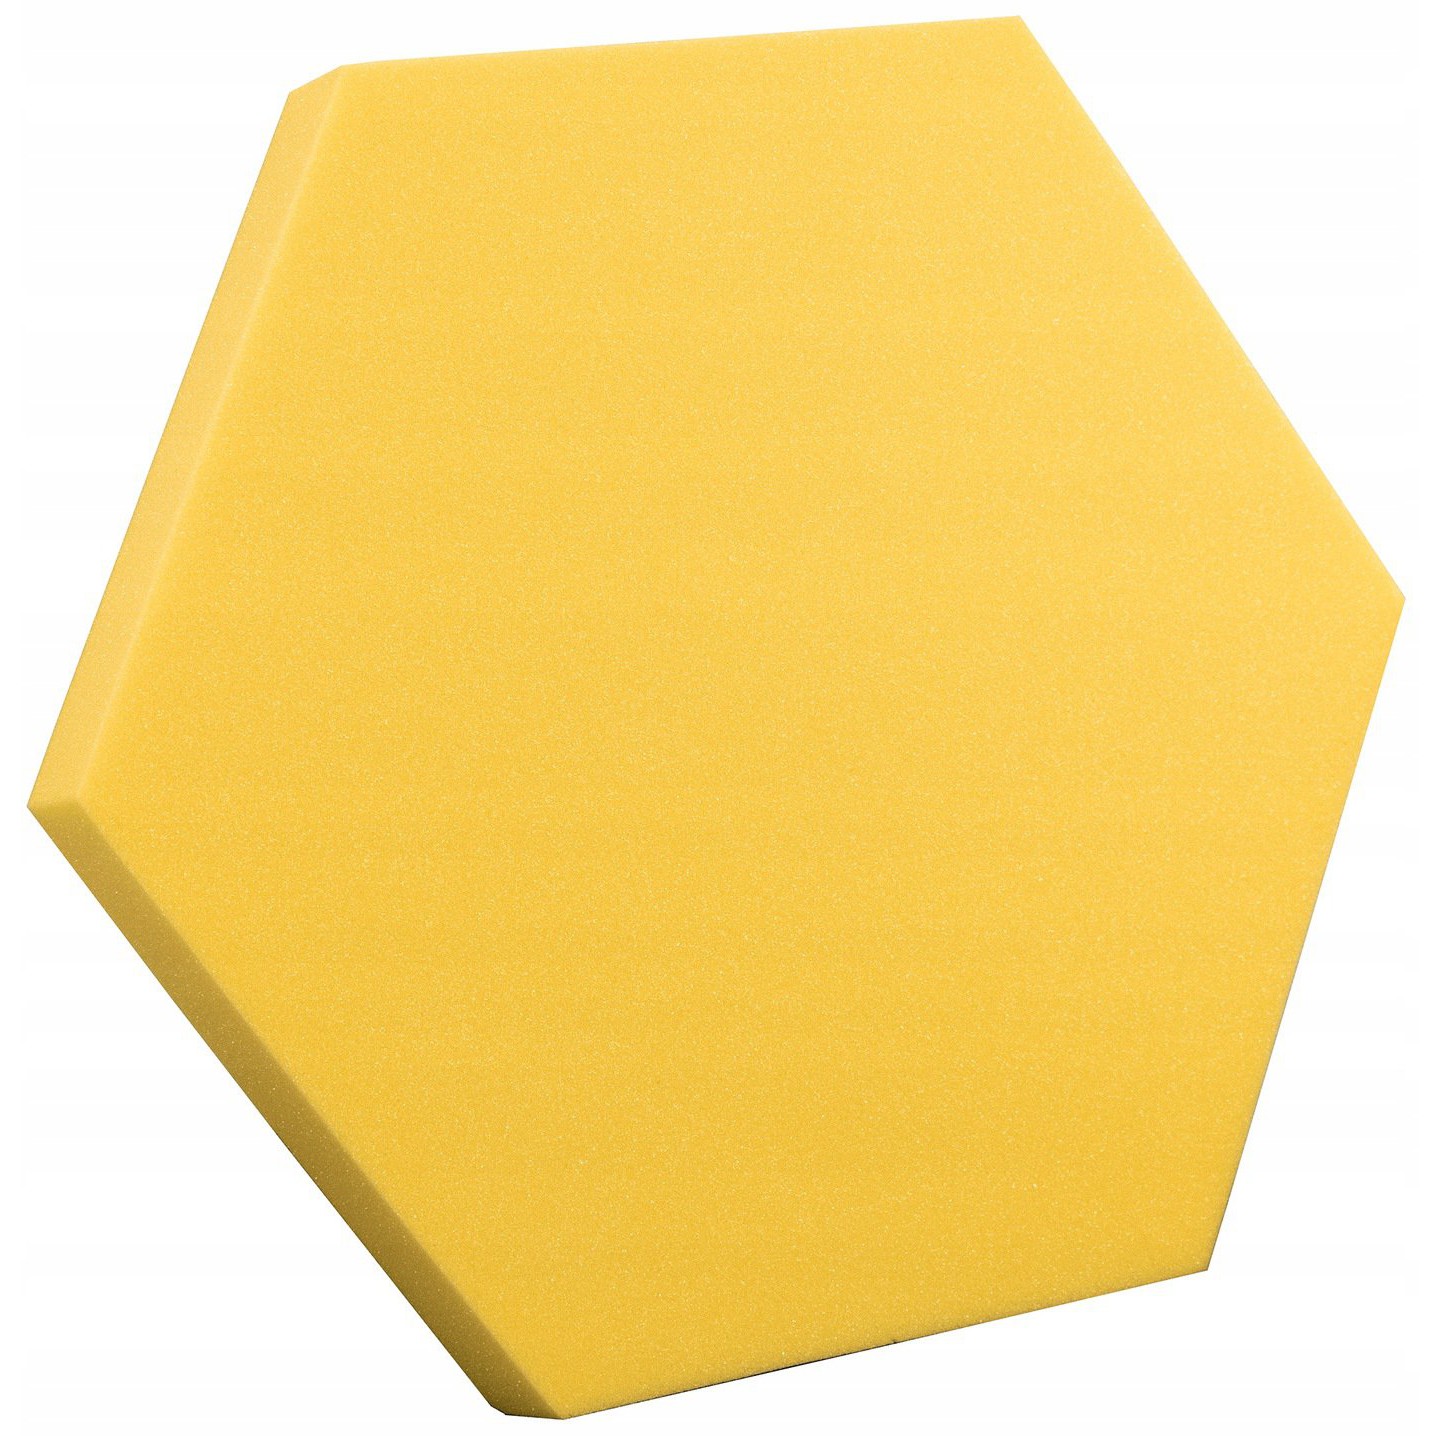 Akustický panel Hexagon žlutá 50x50x5 cm samozhášivá nehořlavá pěna megamix.shop